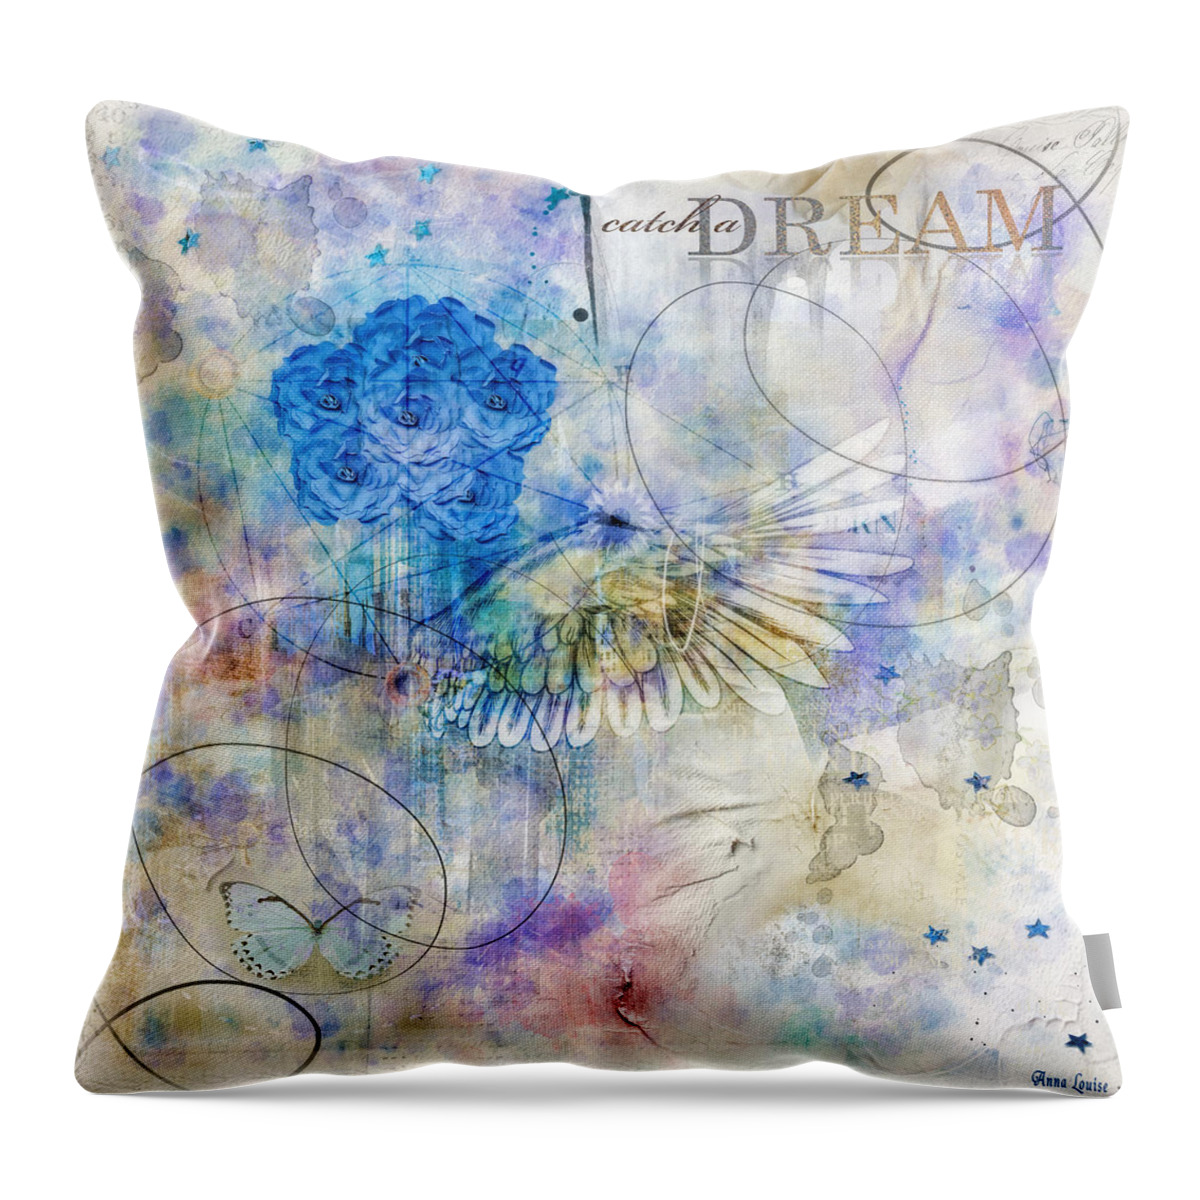 Dream Throw Pillow featuring the digital art Catch A Dream by Anna Louise